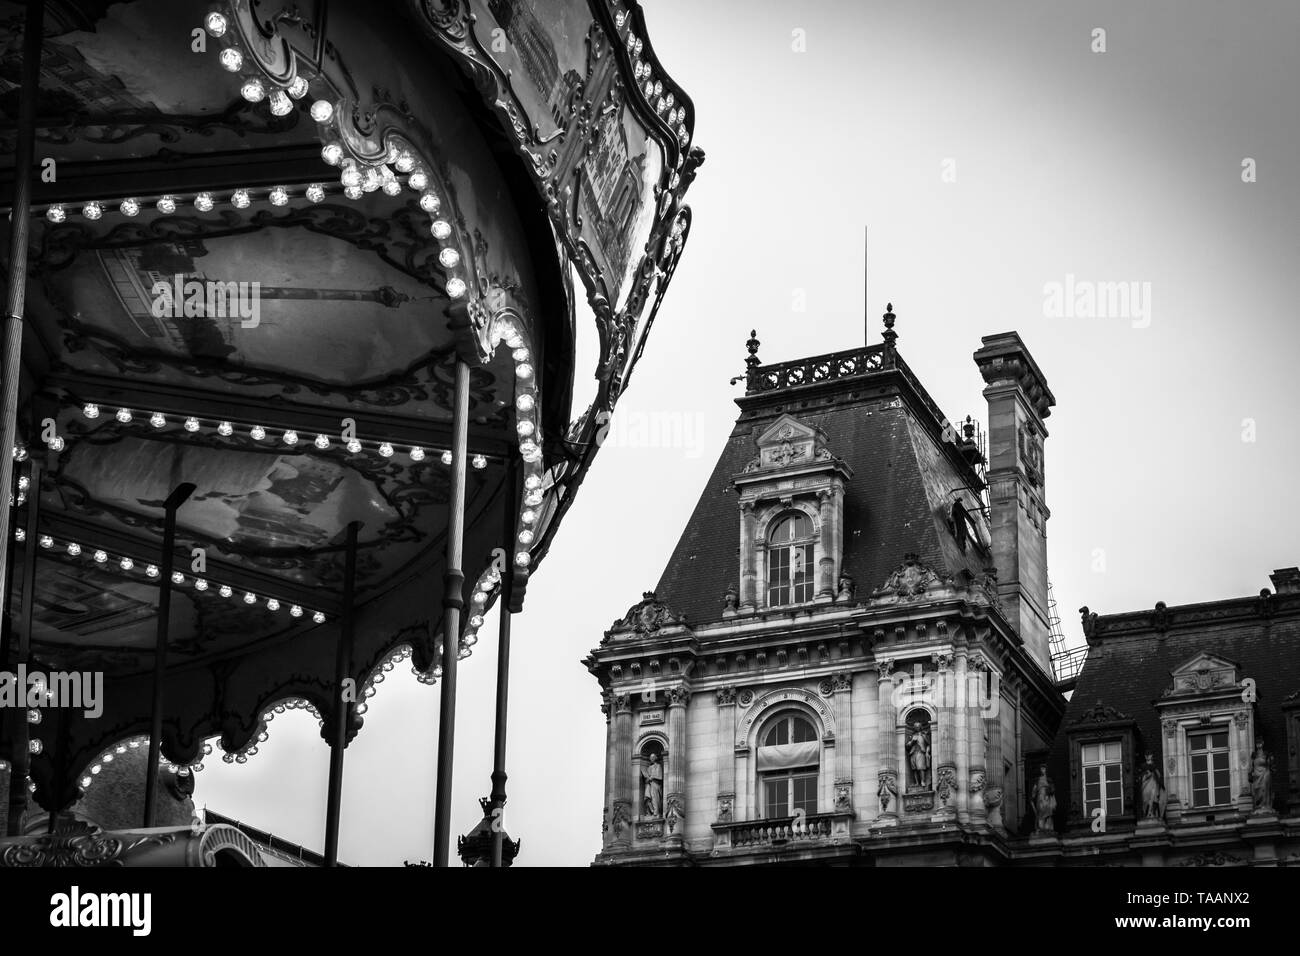 Vintage Landschaft in Schwarz-Weiß-Kontrast des Carrousel des Hotel de Ville in Paris Stockfoto